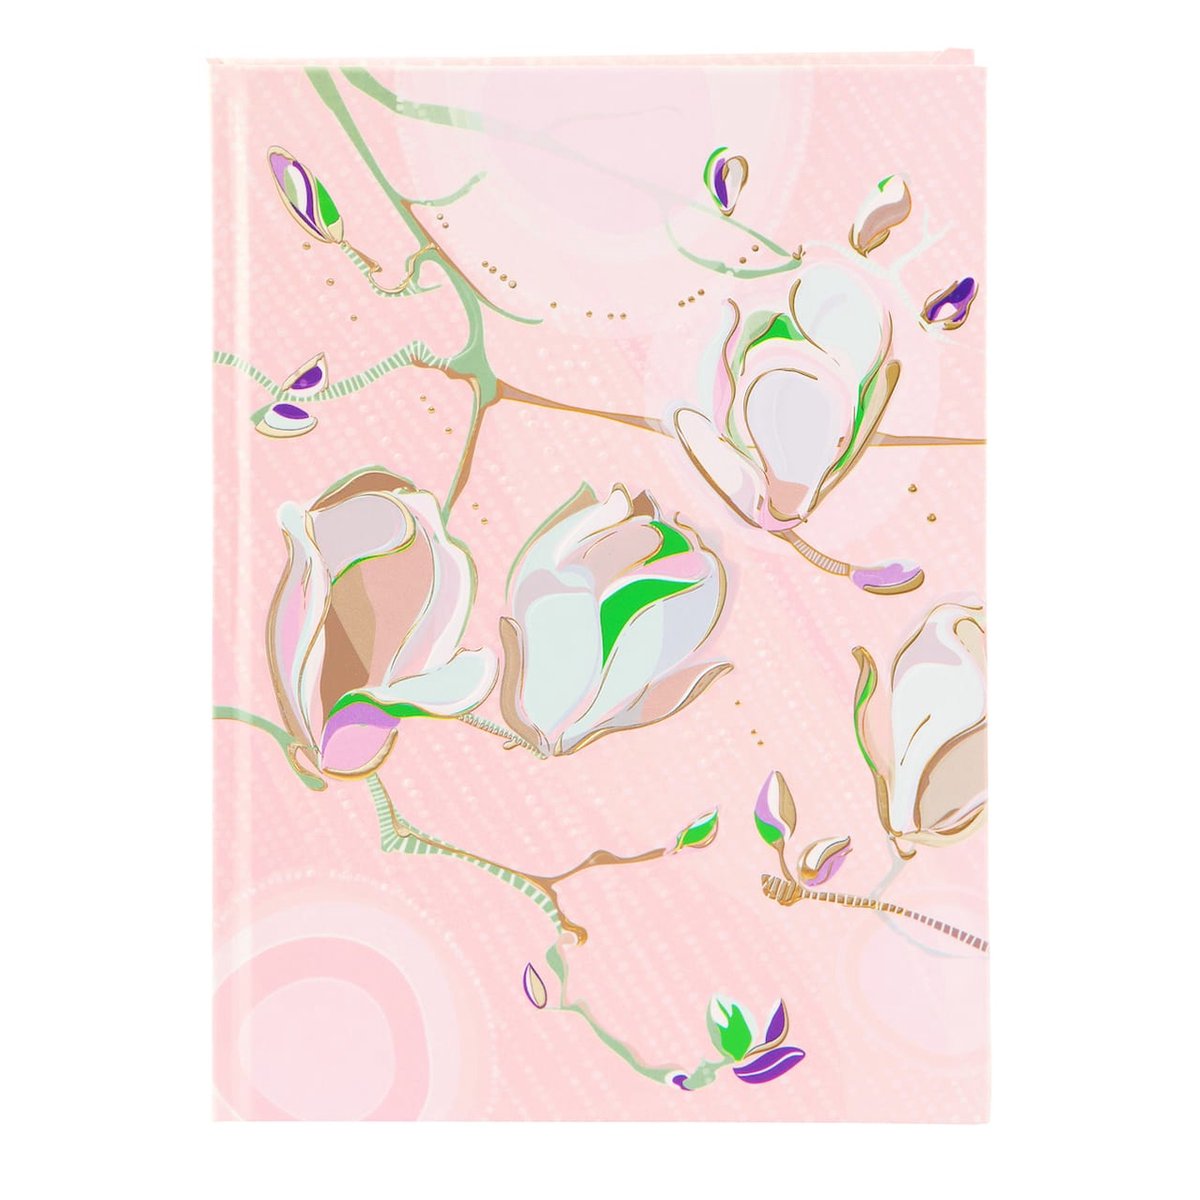 Goldbuch - Notitieboek A5 Magnolia Rosé